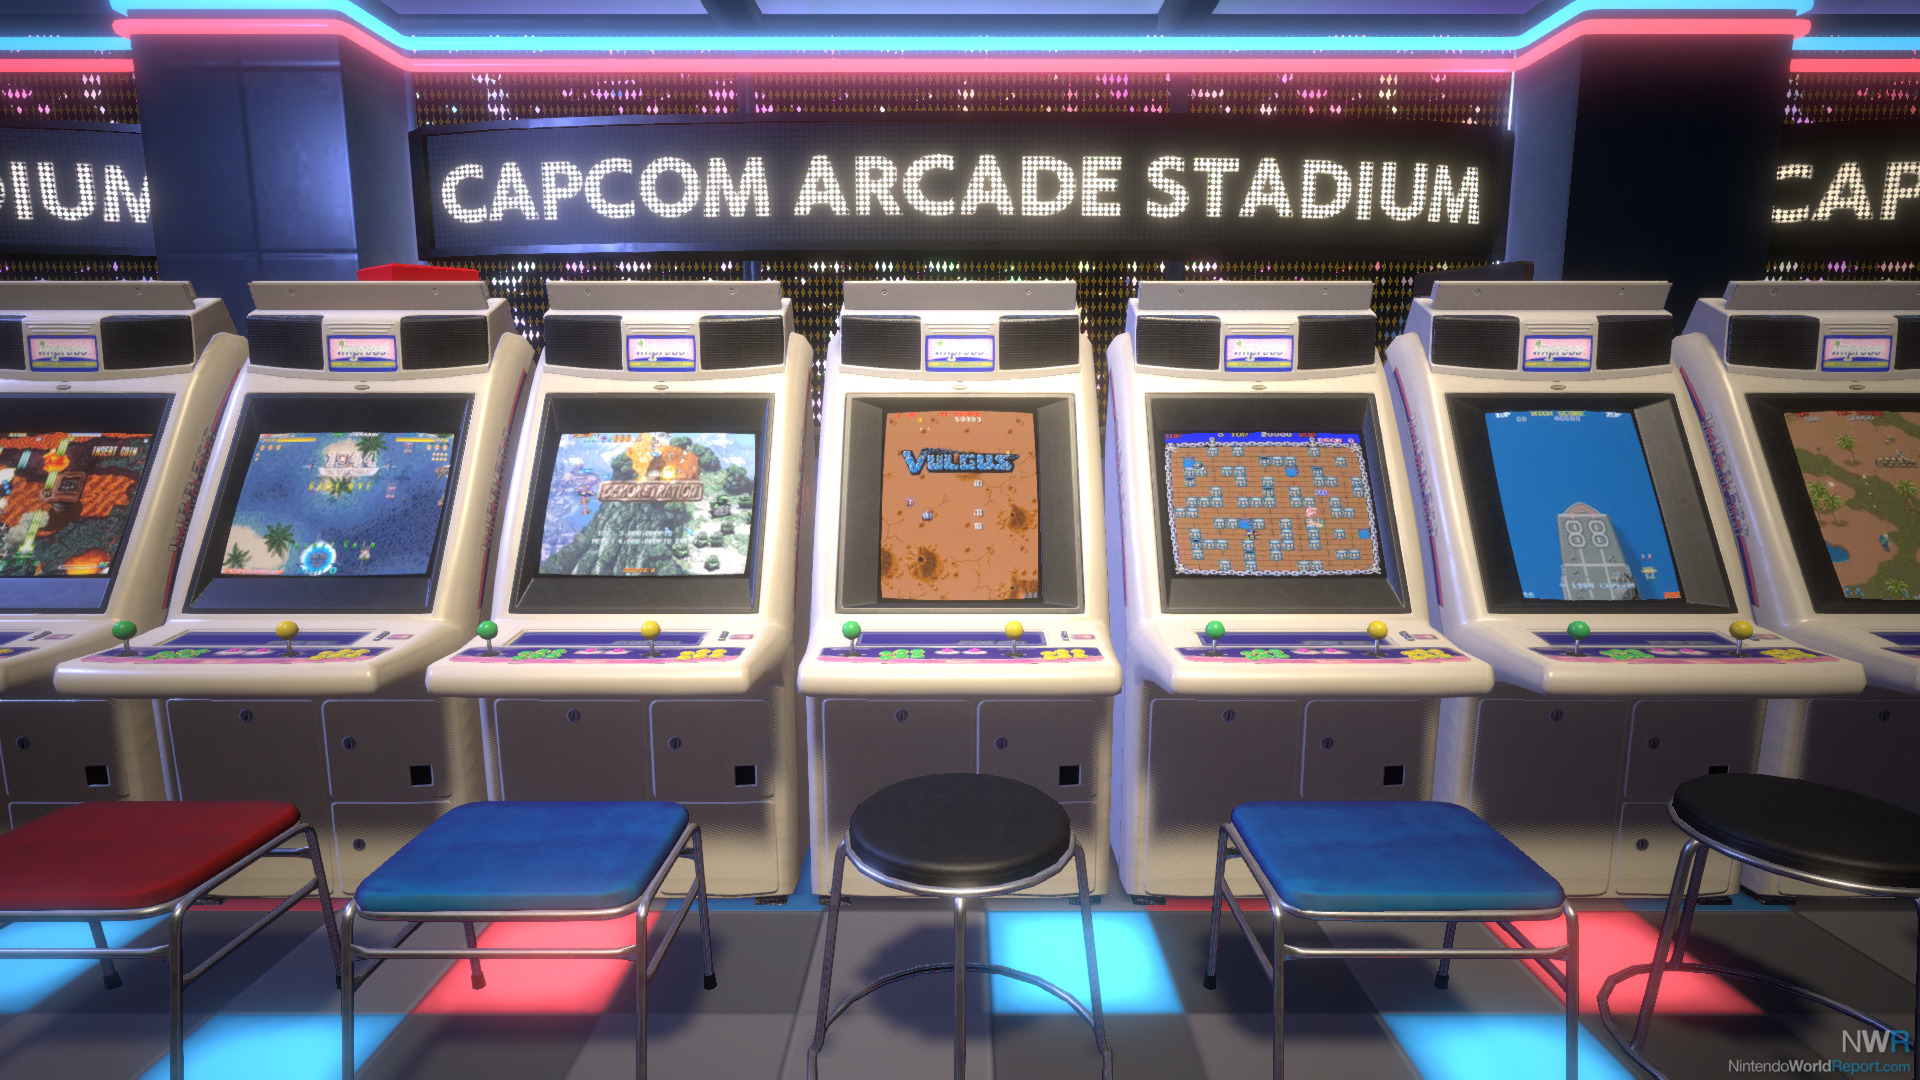 Capcom Arcade Stadium：Ghosts 'n Goblins for Nintendo Switch